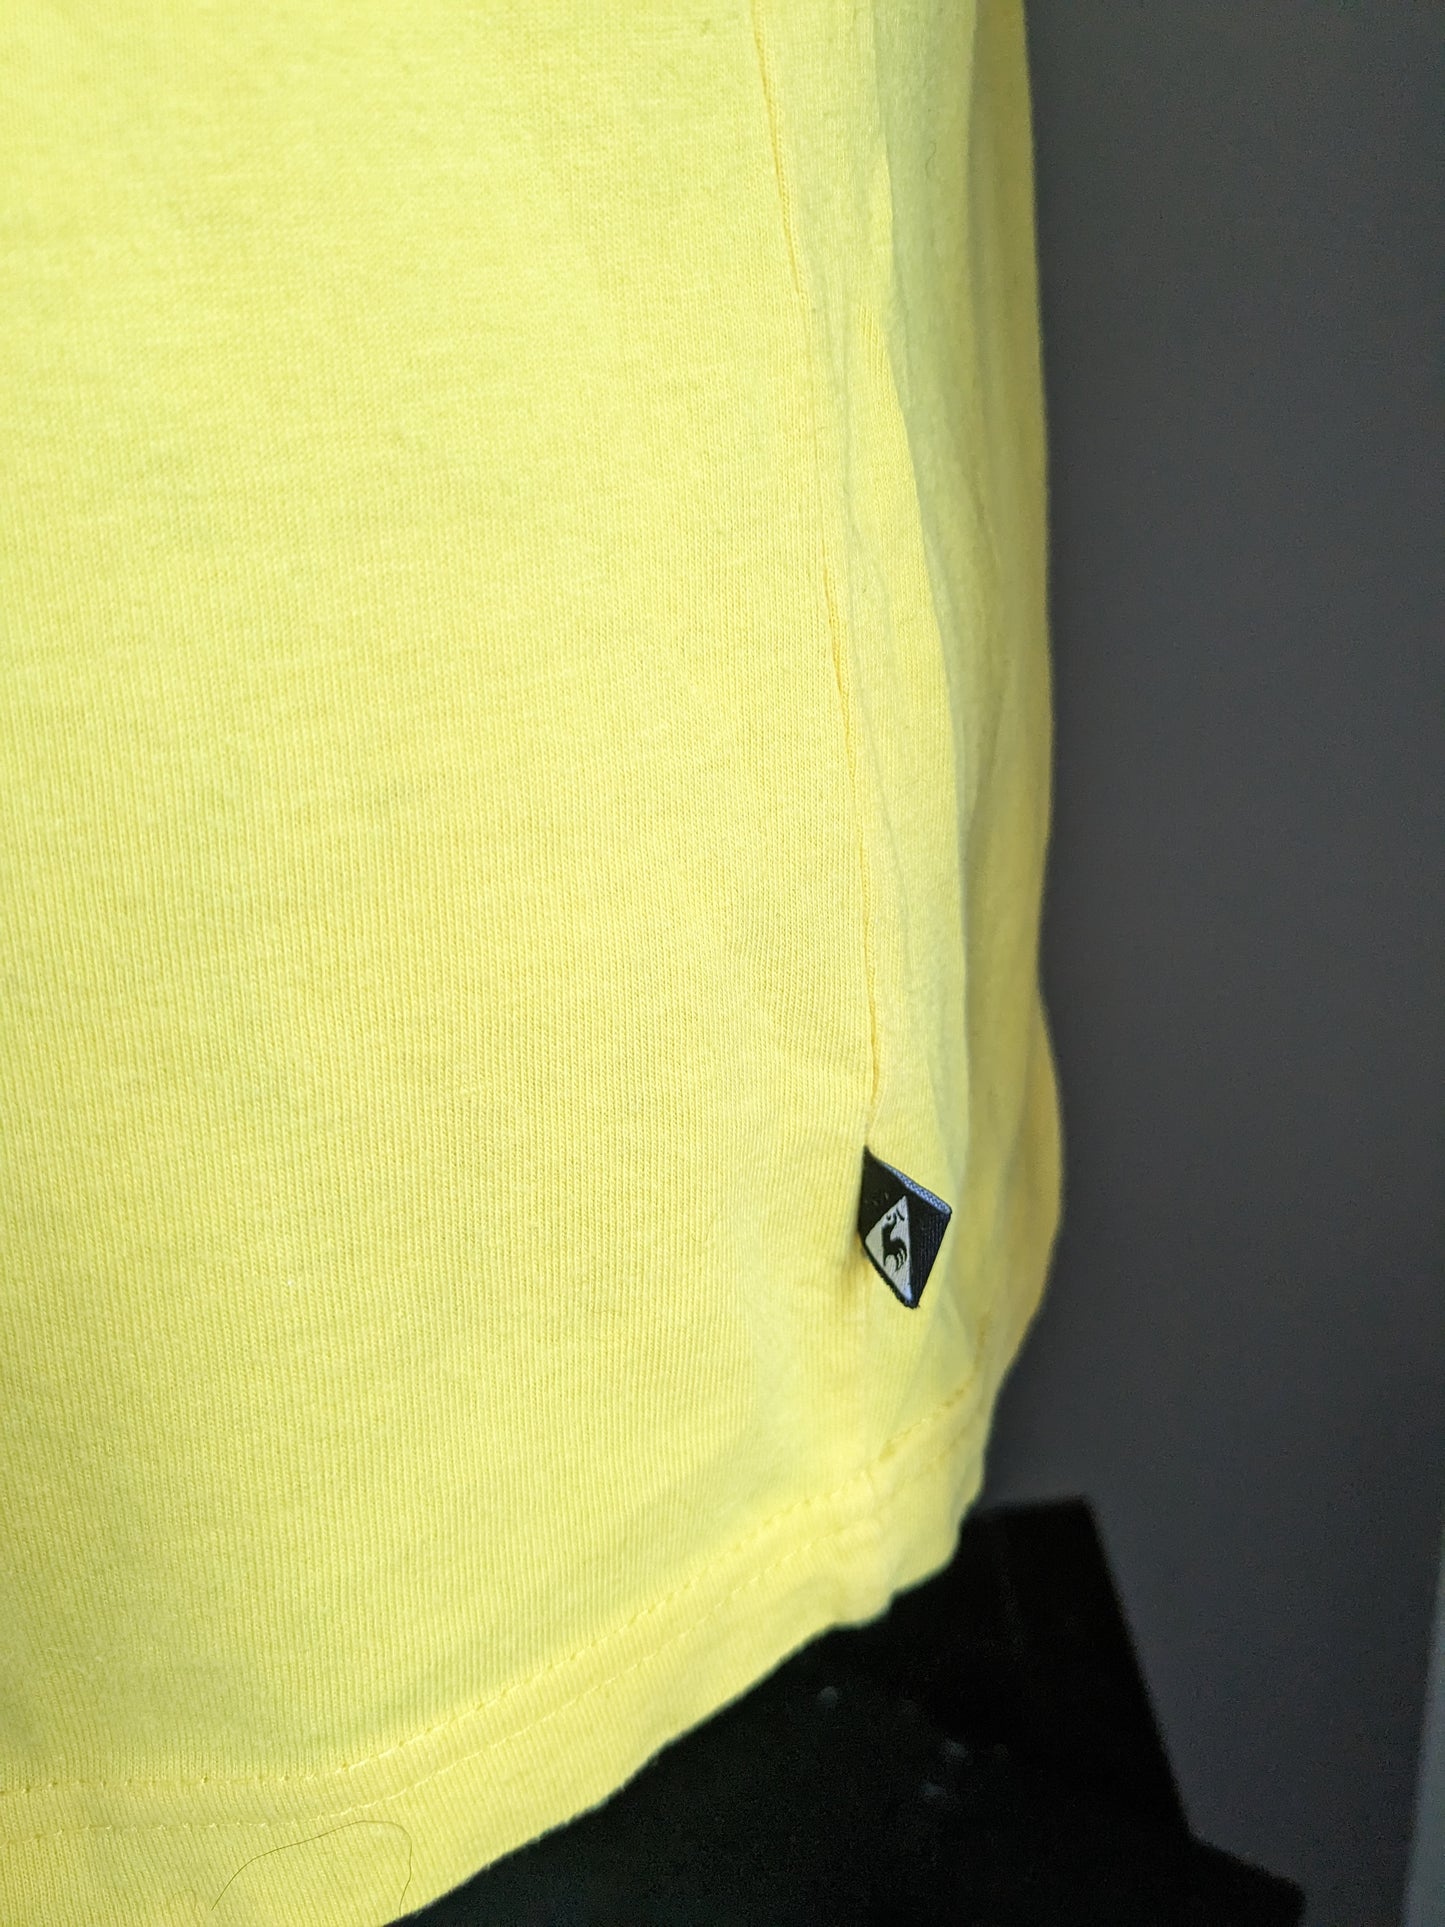 Le Coq Sportif Singlet. Yellow with print. Size L.